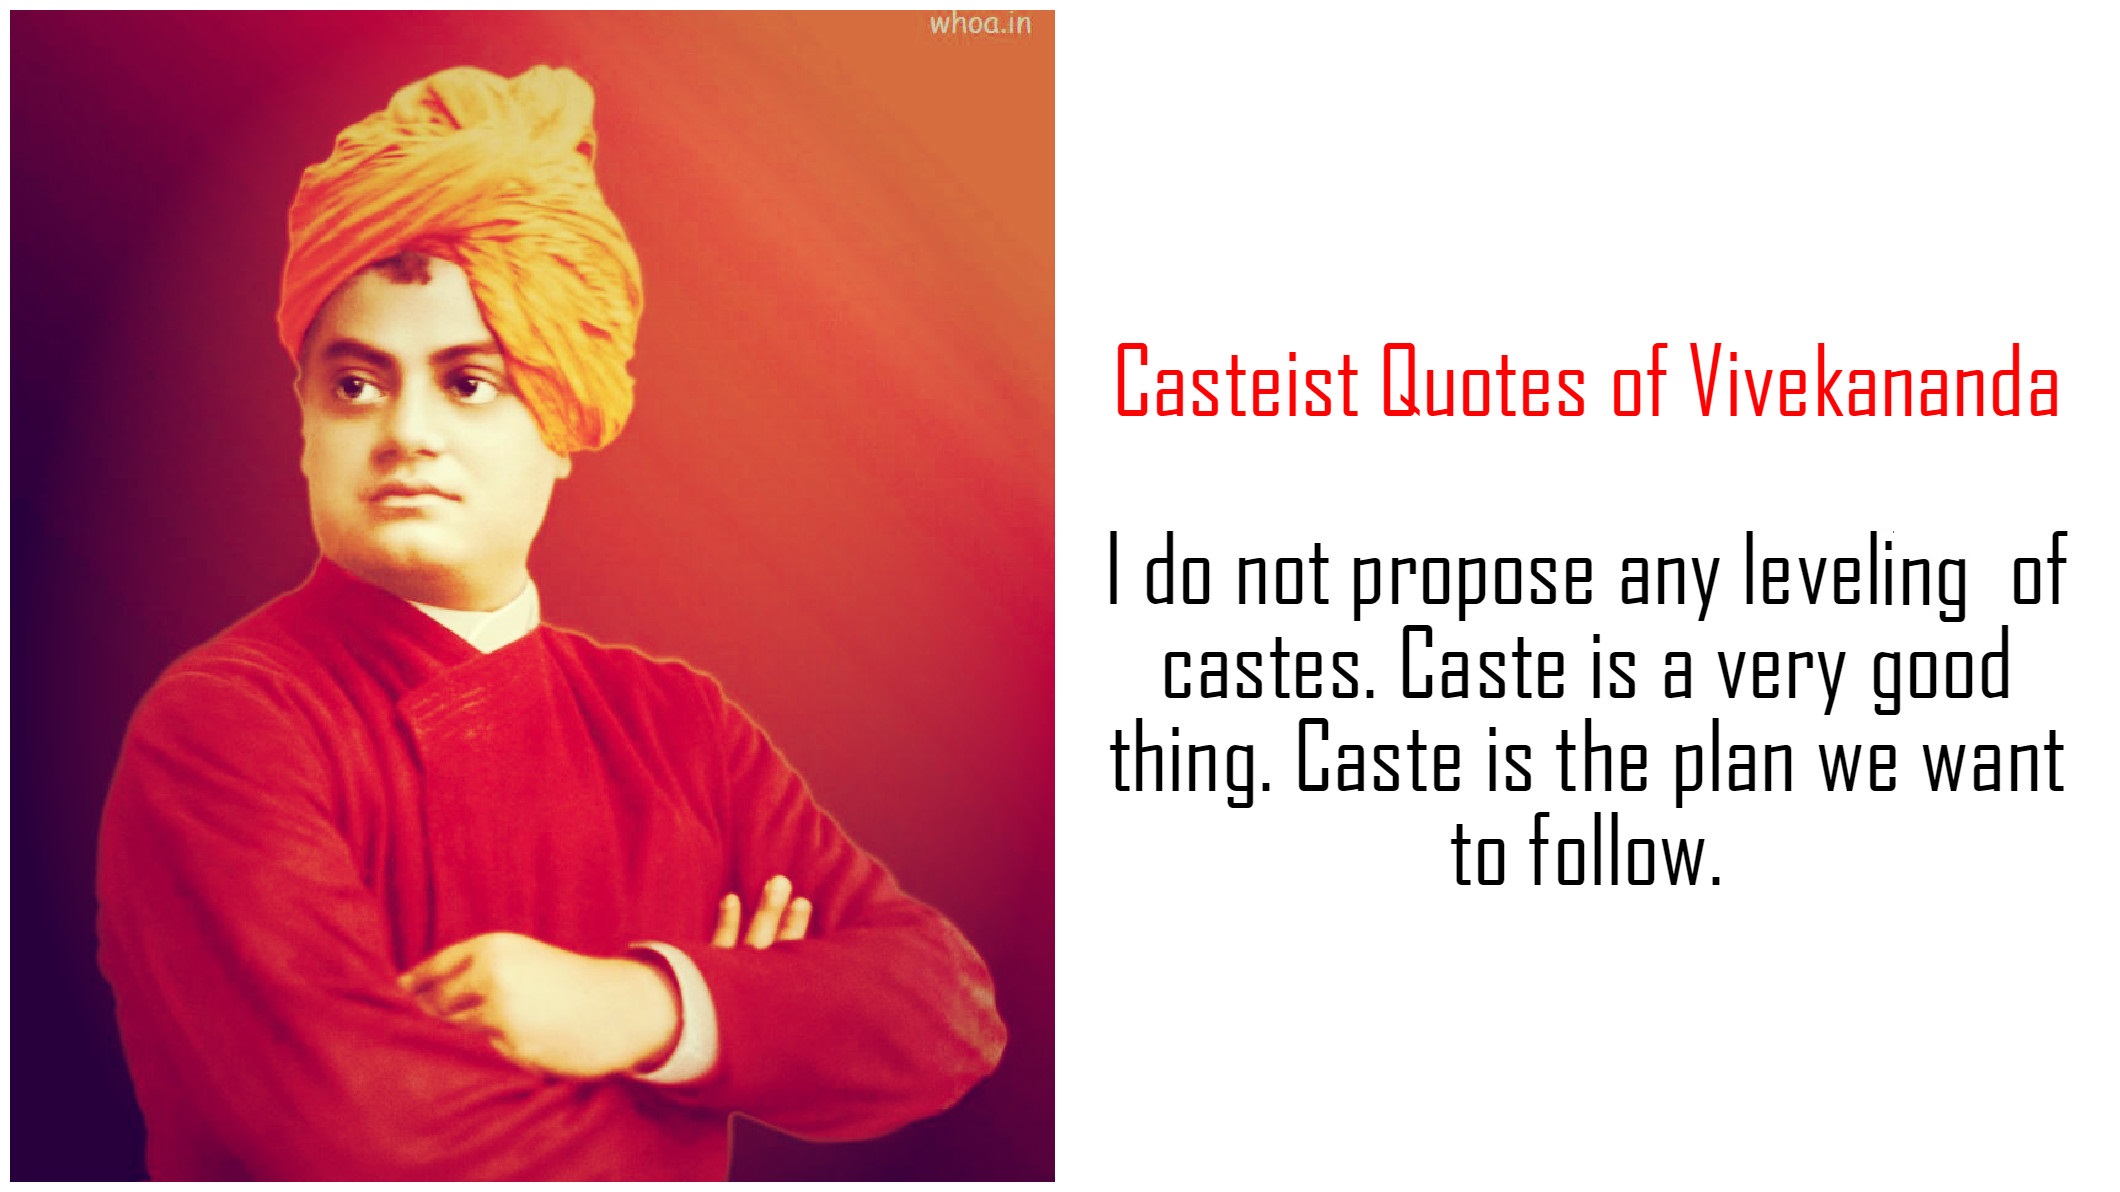 Castiest Quotes of Vivekananda